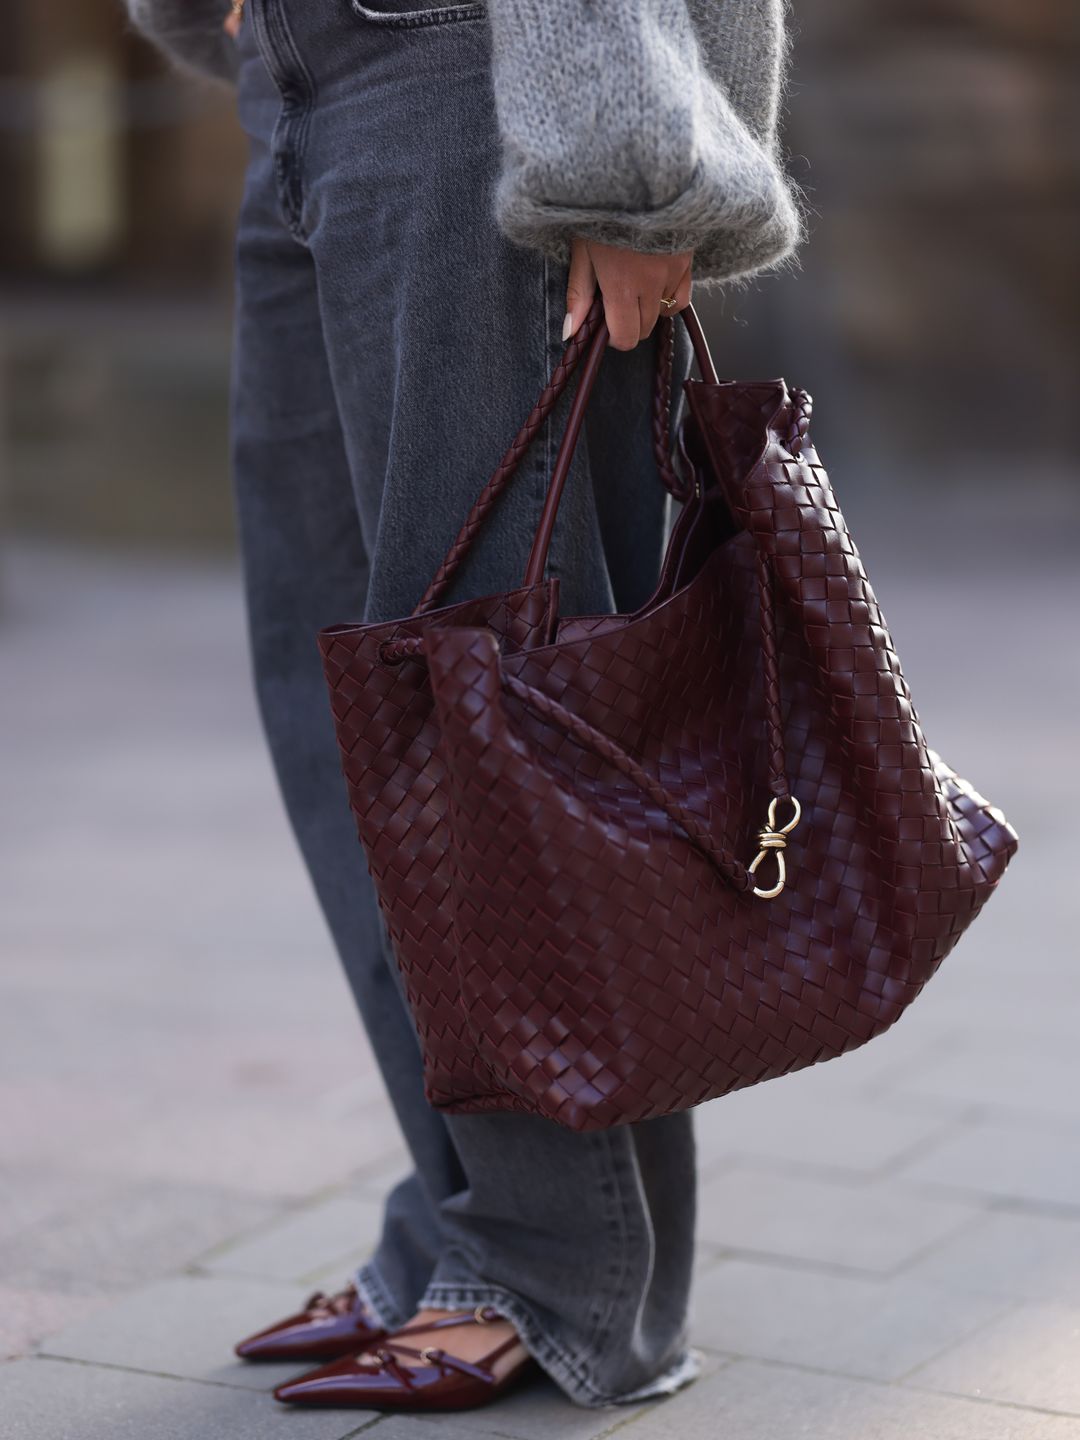 We love how Aylin Koeing has matched her shoes to her Bottega Veneta Andiamo bag